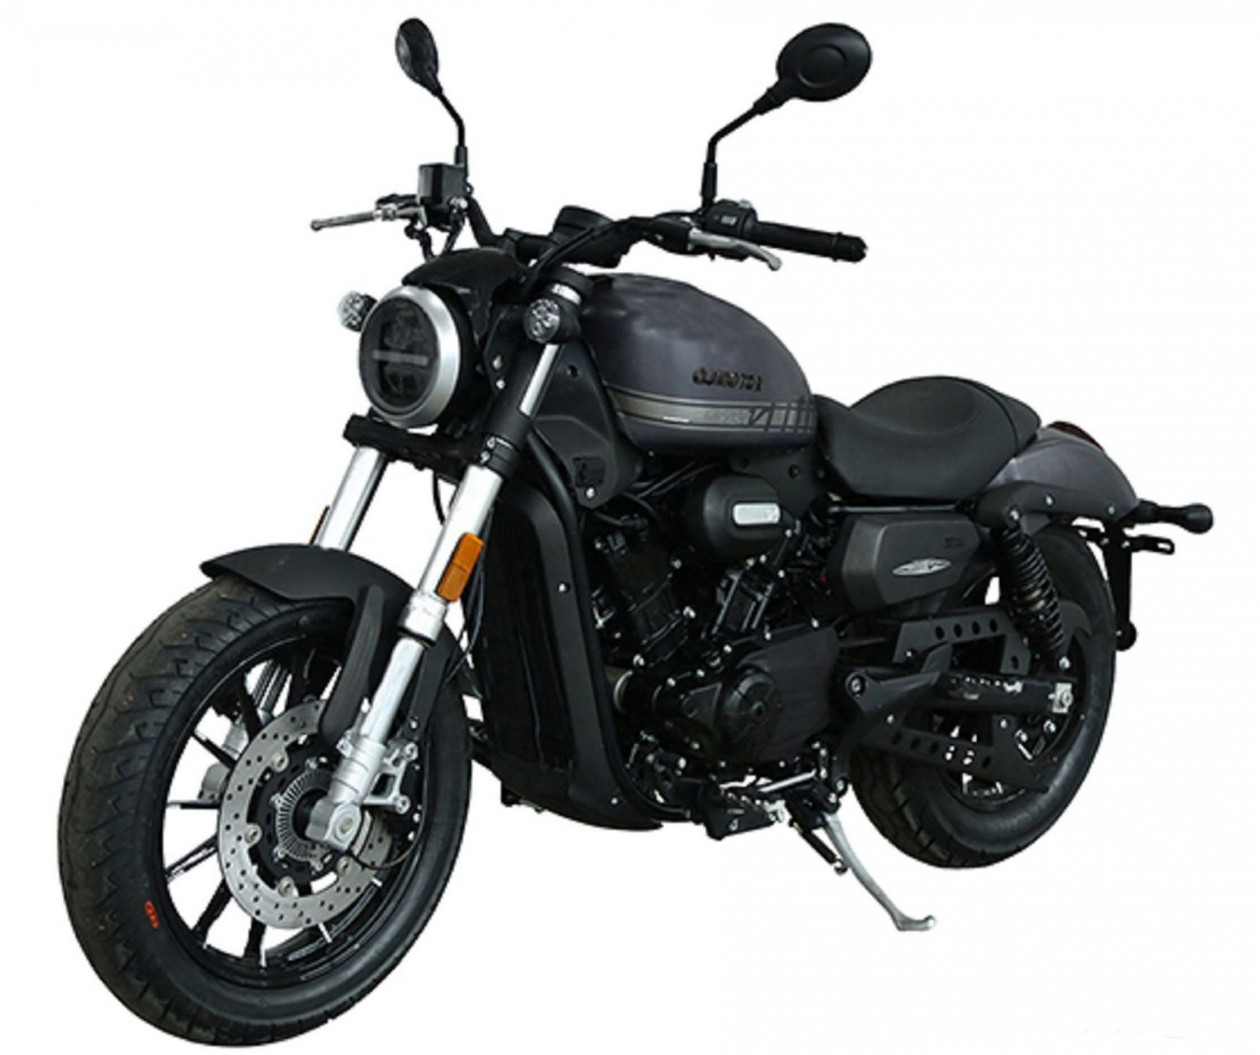 QJ Motor SRV300 – Αποκαλυπτήρια για τη νέα μικρή Harley-Davidson